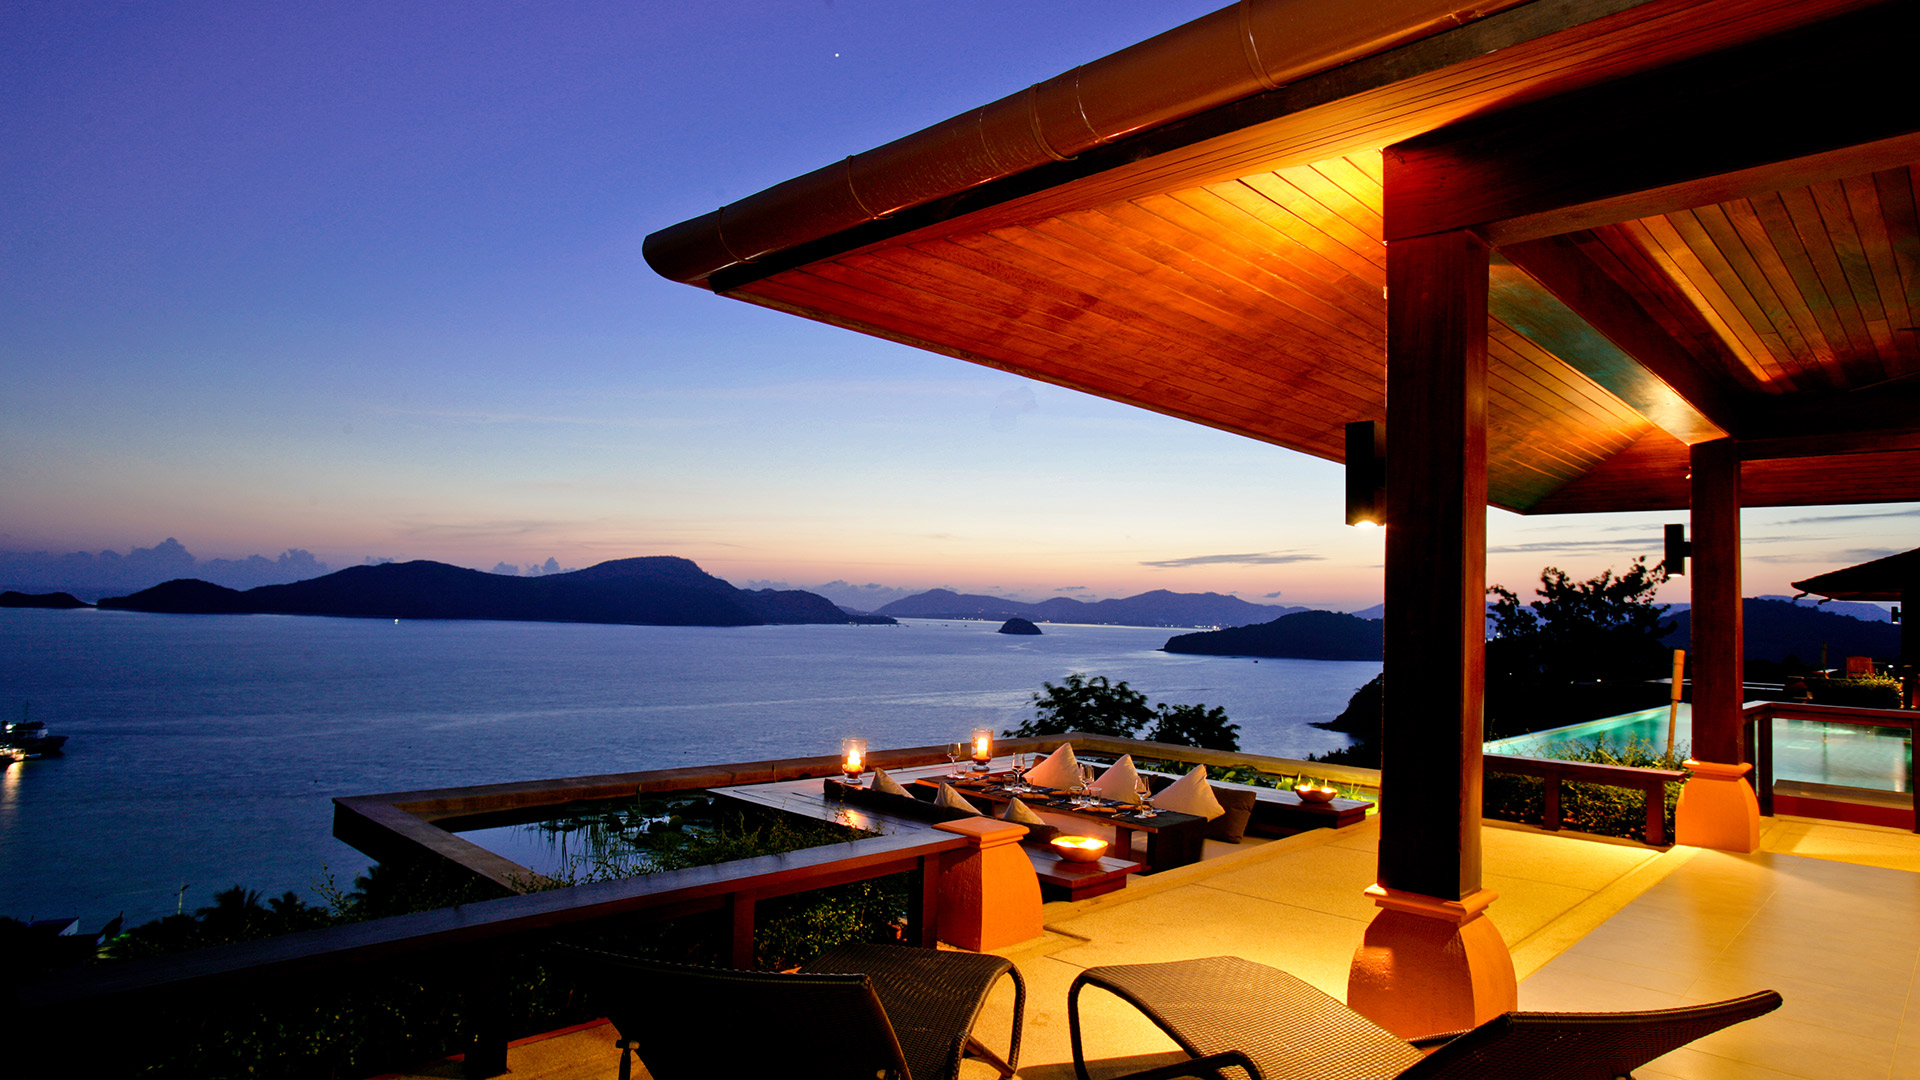 6 star hotel in phuket residence villa luxury five bedroom